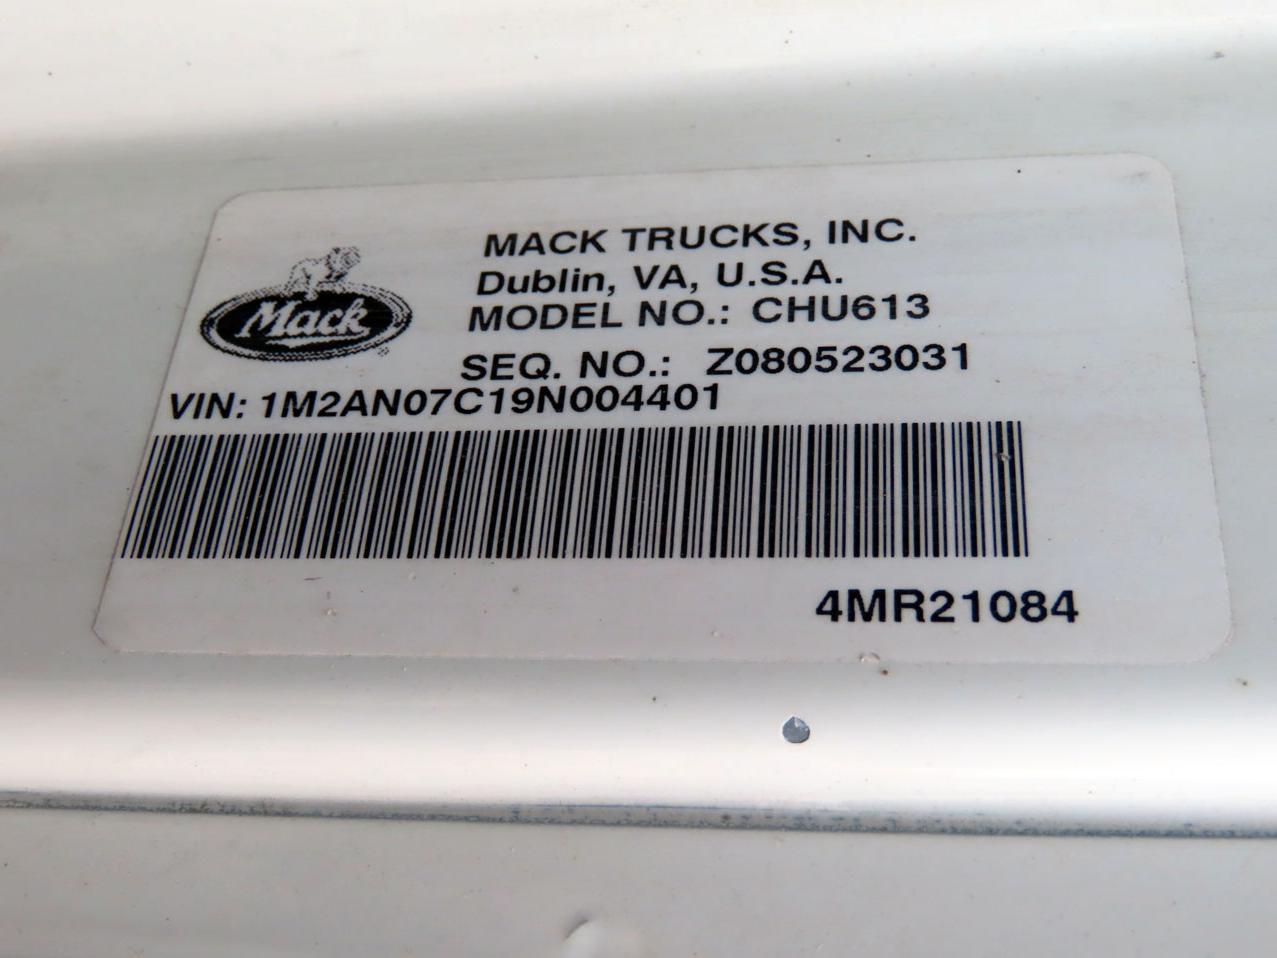 2009 Mack Model CHU613 Tandem Axle Conventional Day Cab Truck Tractor, VIN# 1M2AN07C19N004401, Mack